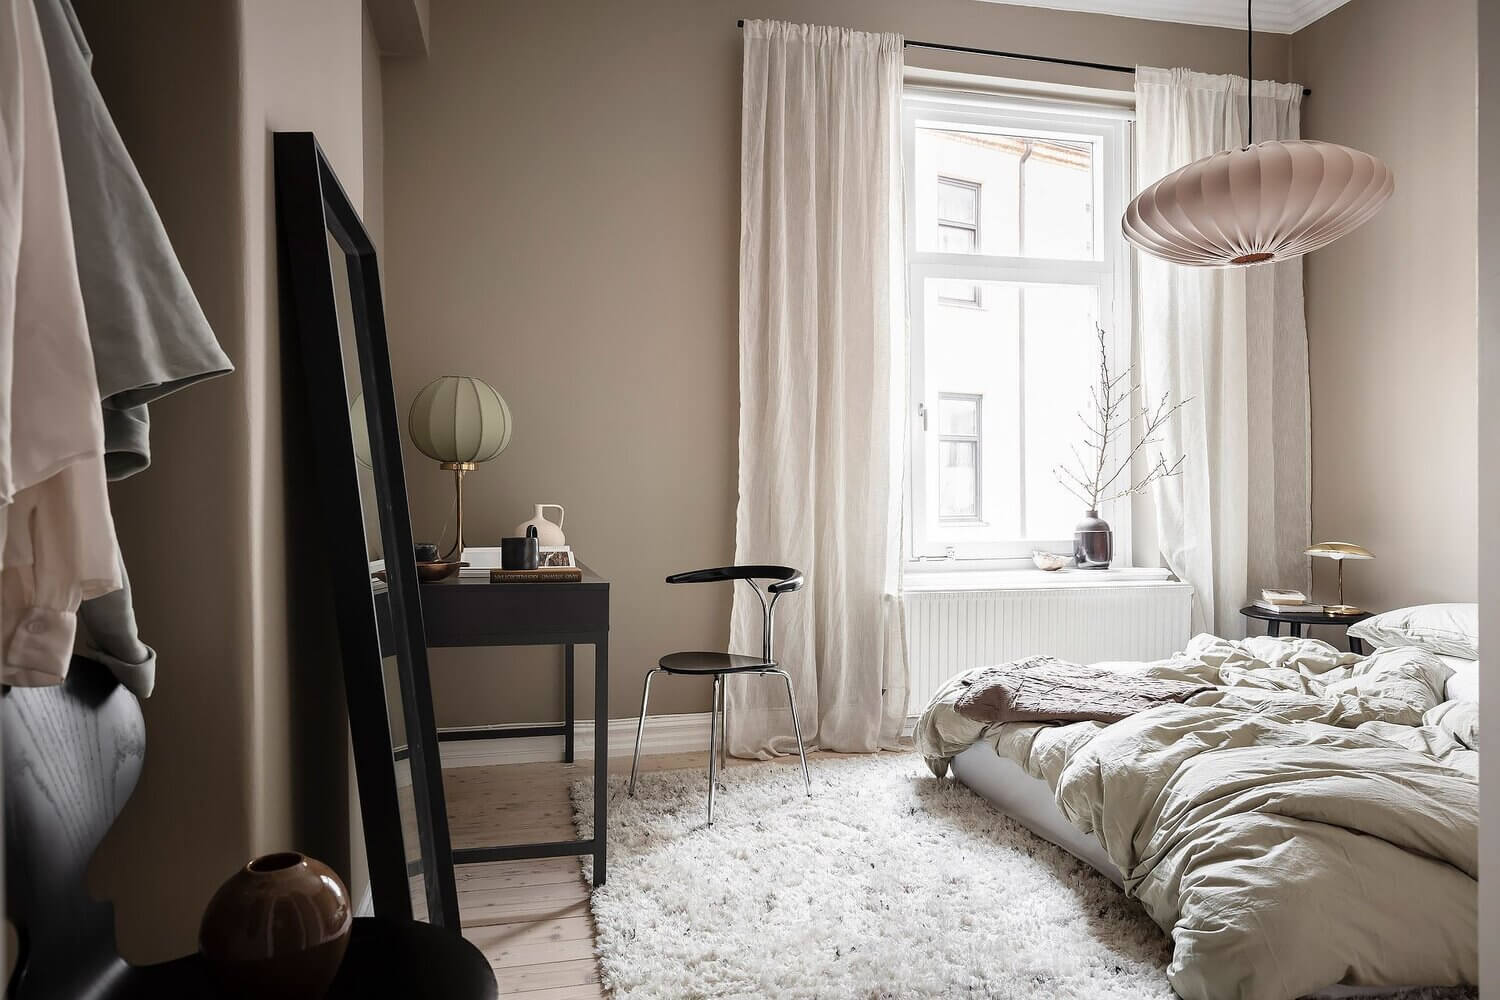 AScandinavianApartmentWithOliveGreenWalls TheNordroom21 A Scandinavian Apartment With Olive Green Walls